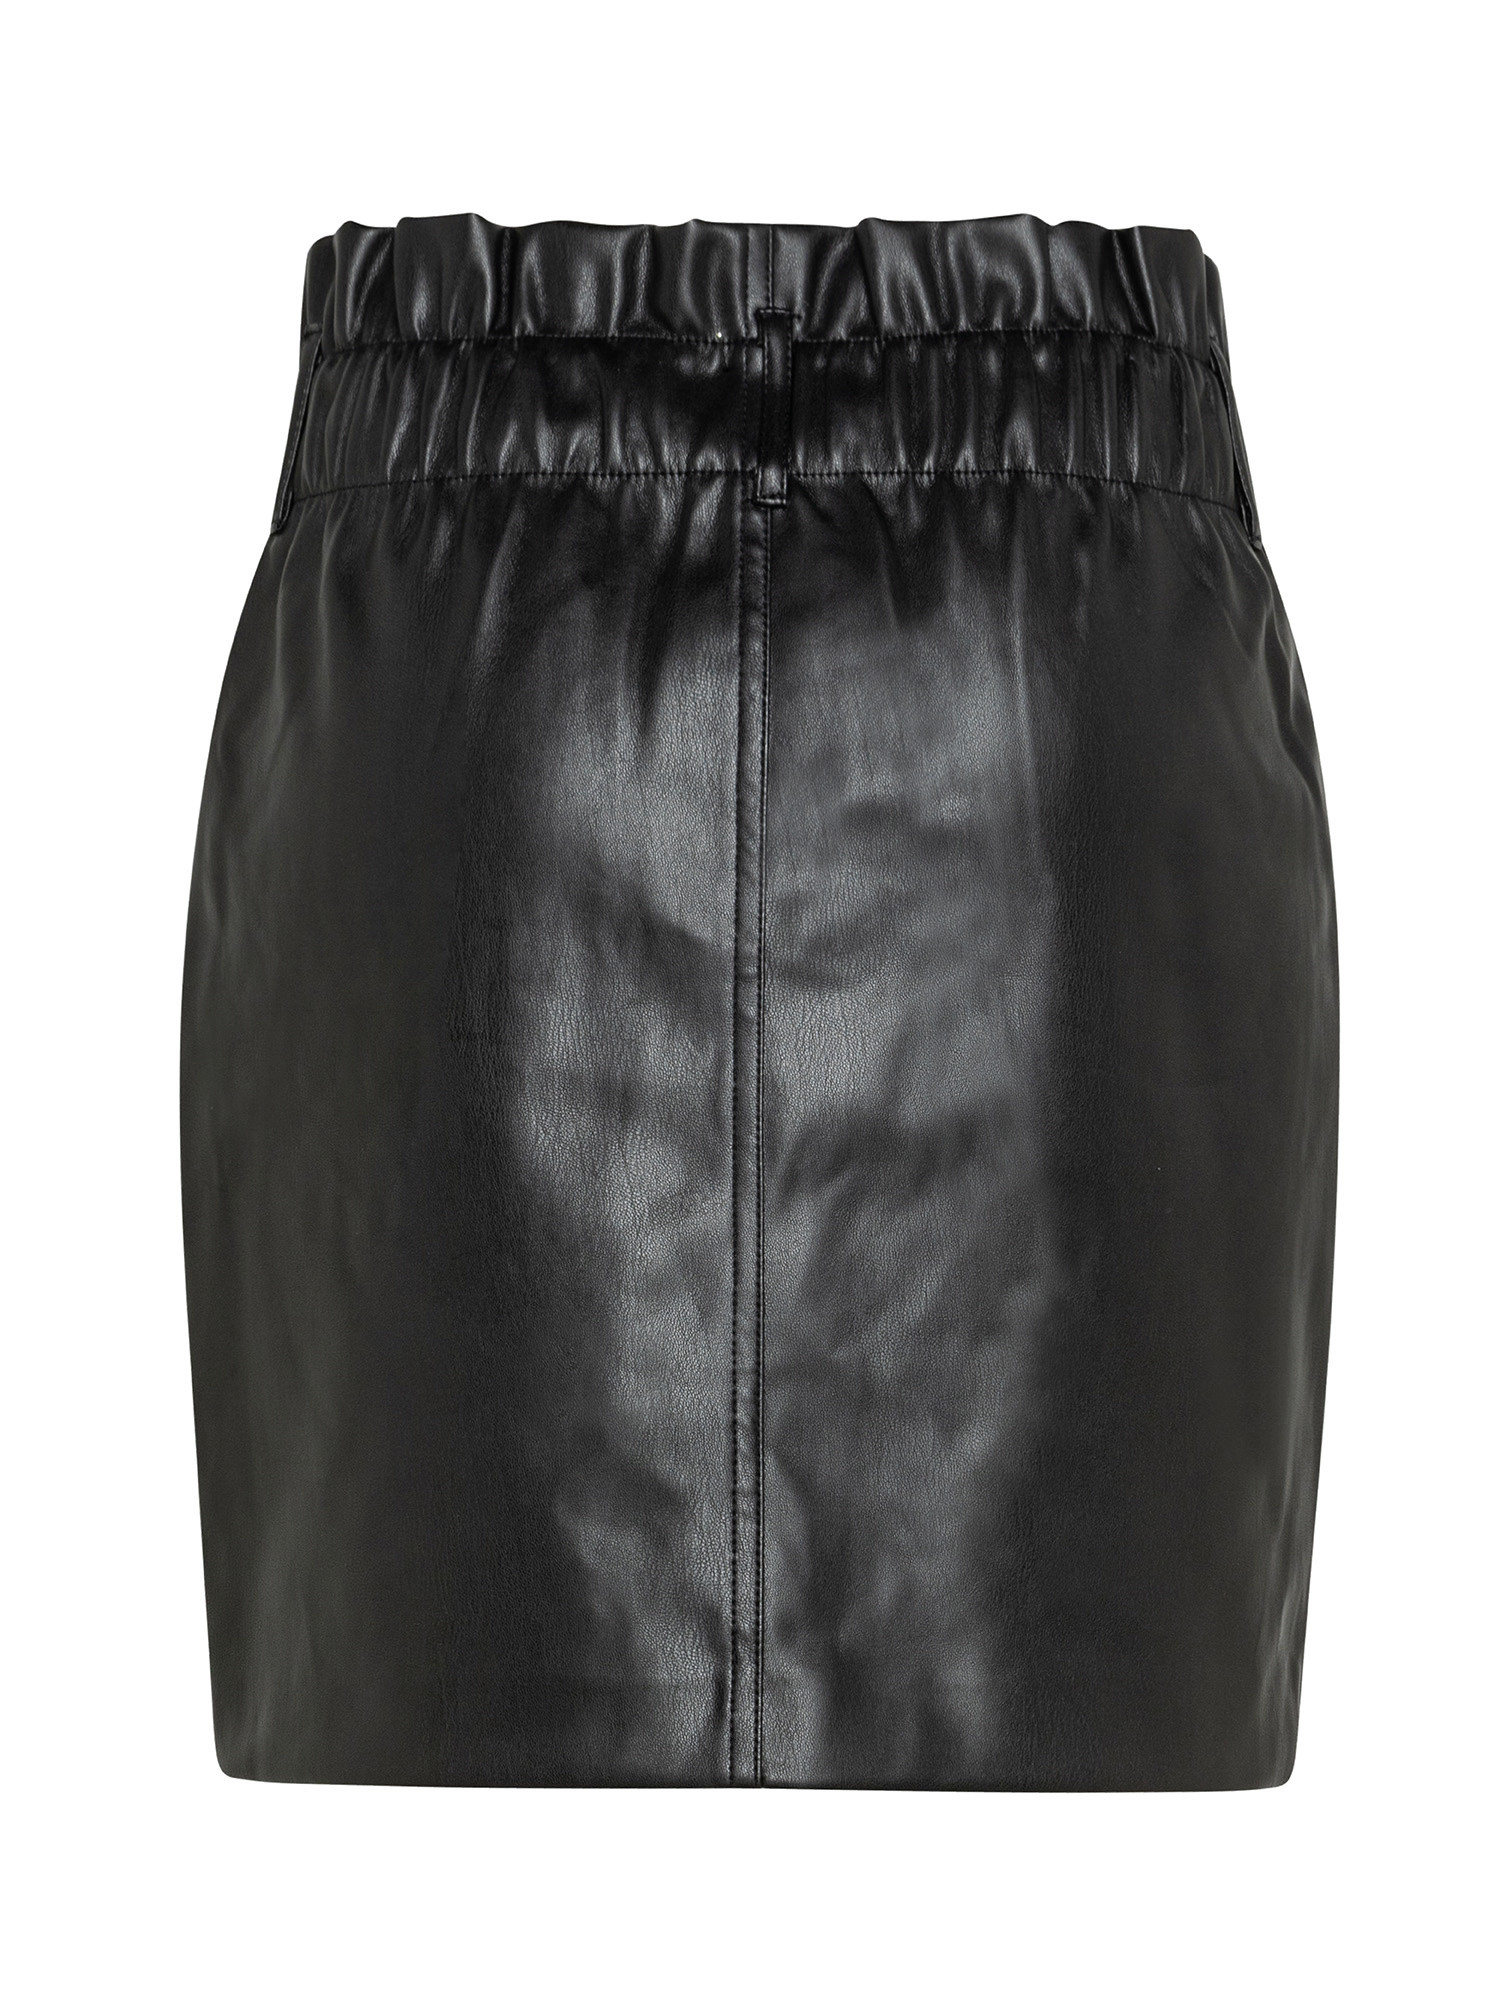 faux leather skirt, Black, large image number 1